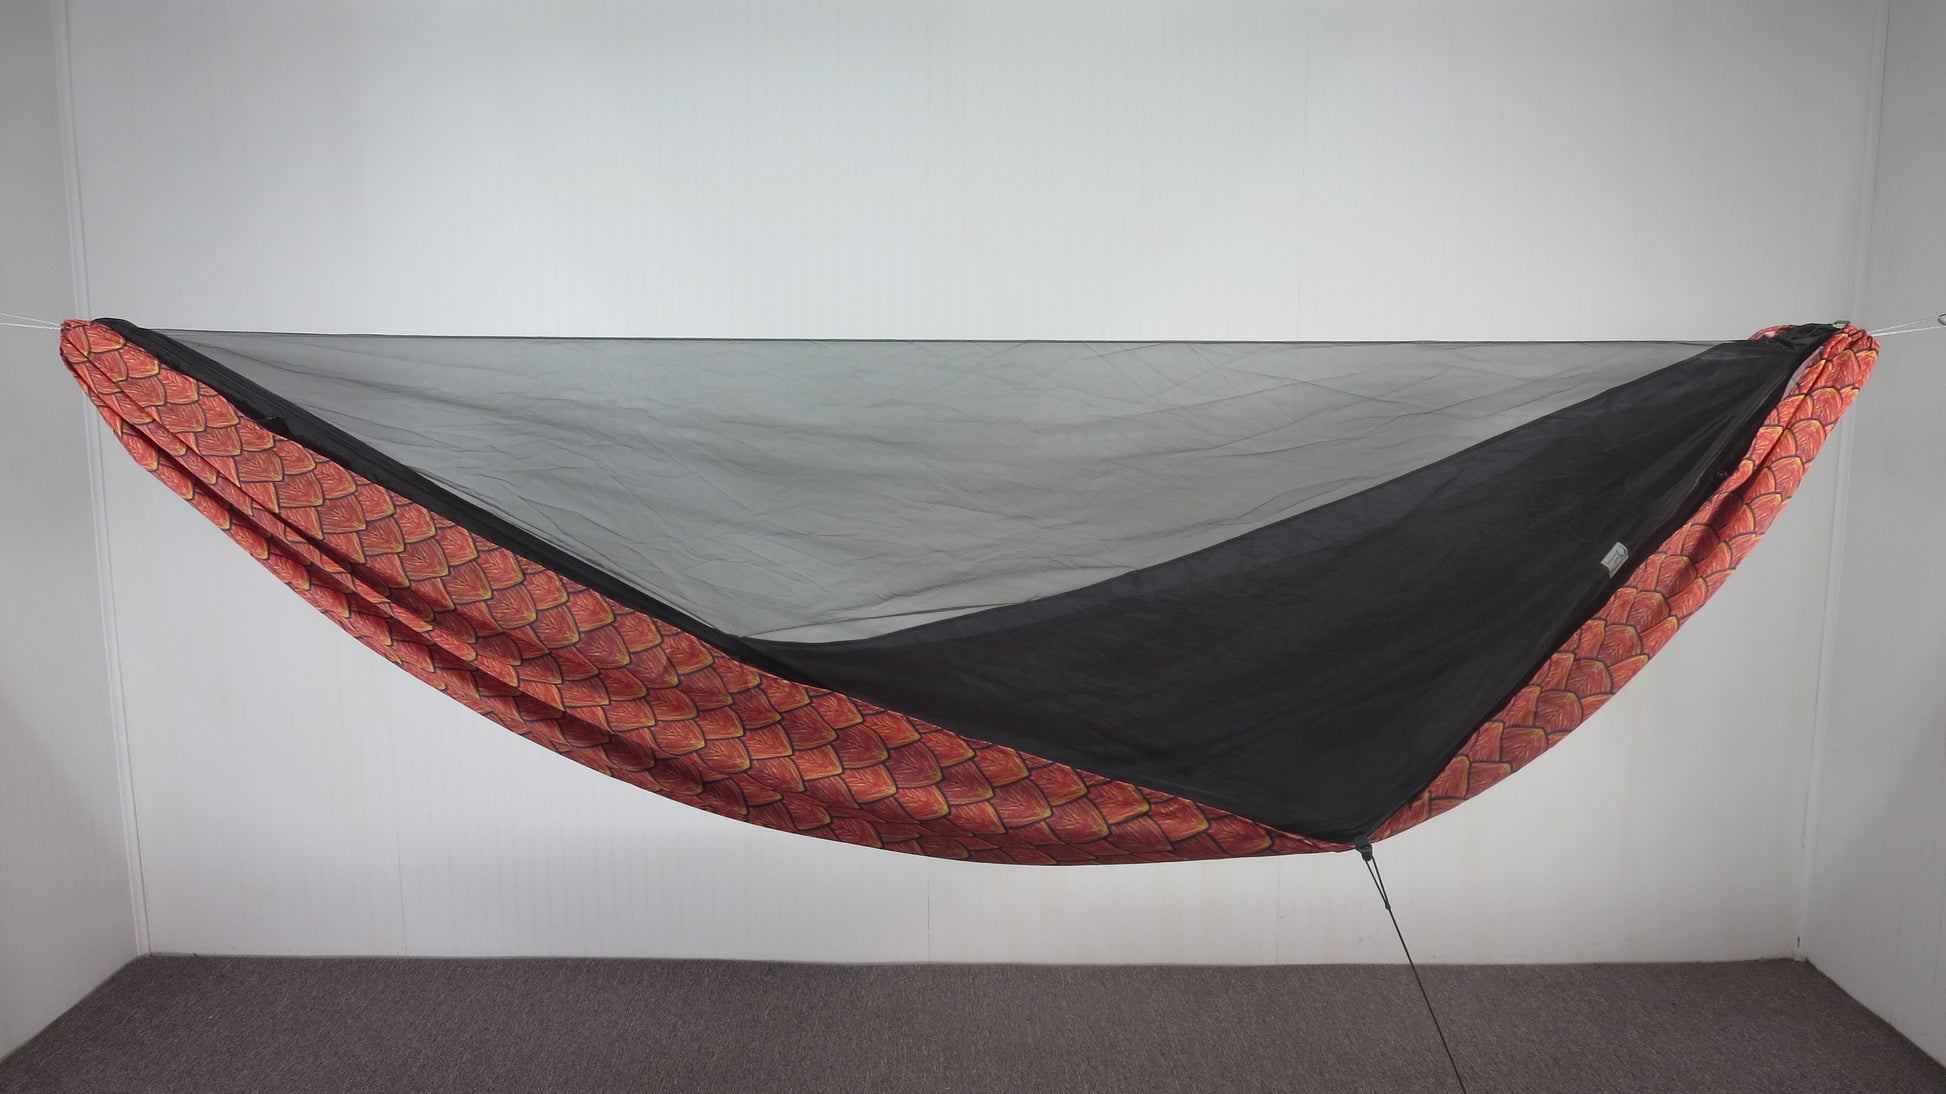 ultralight camping hammock custom made dream hammock with bugnet or mosquito net best